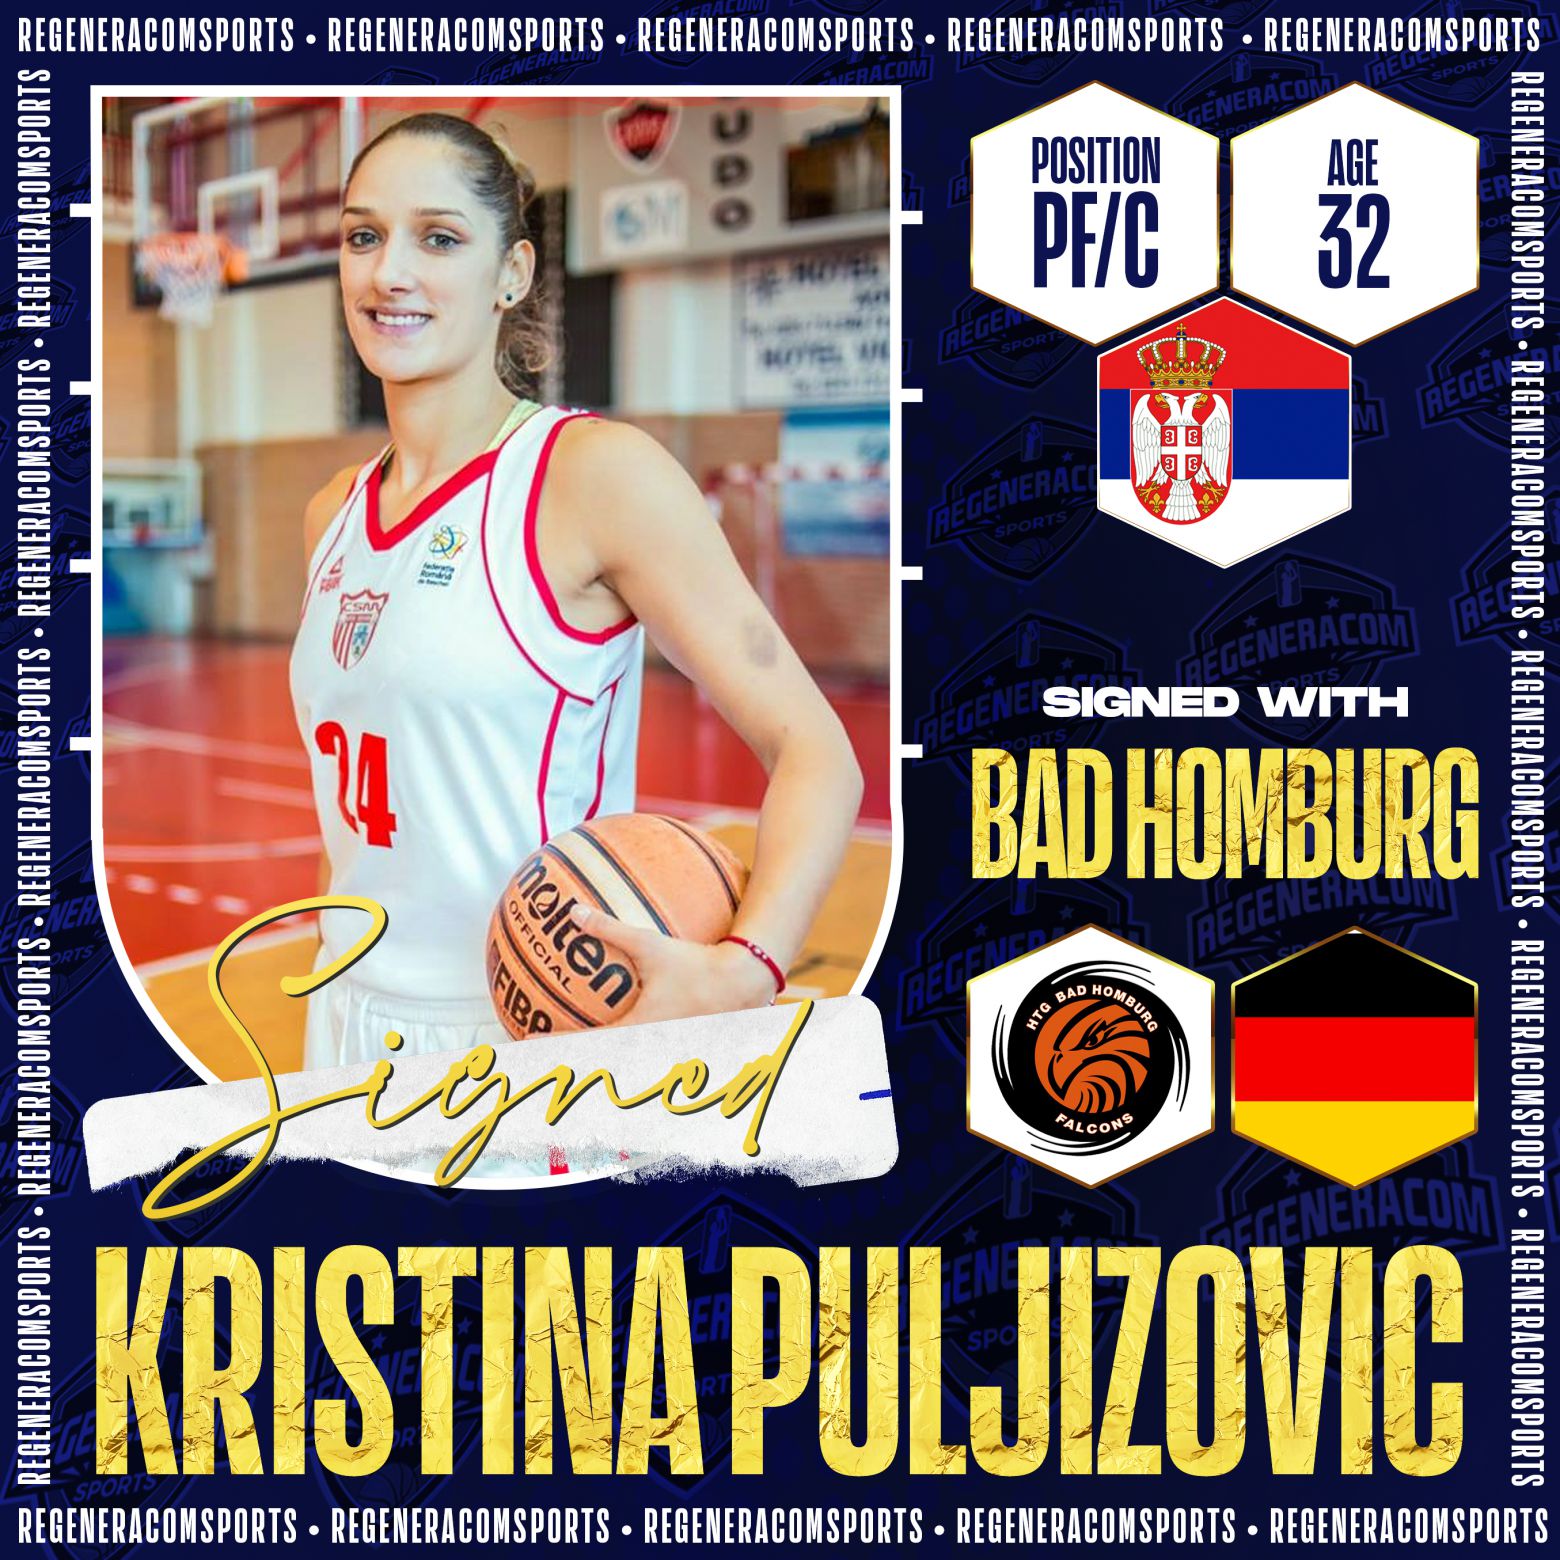 KRISTINA PULJIZOVIC ha firmado en Alemania con Bad Homburg